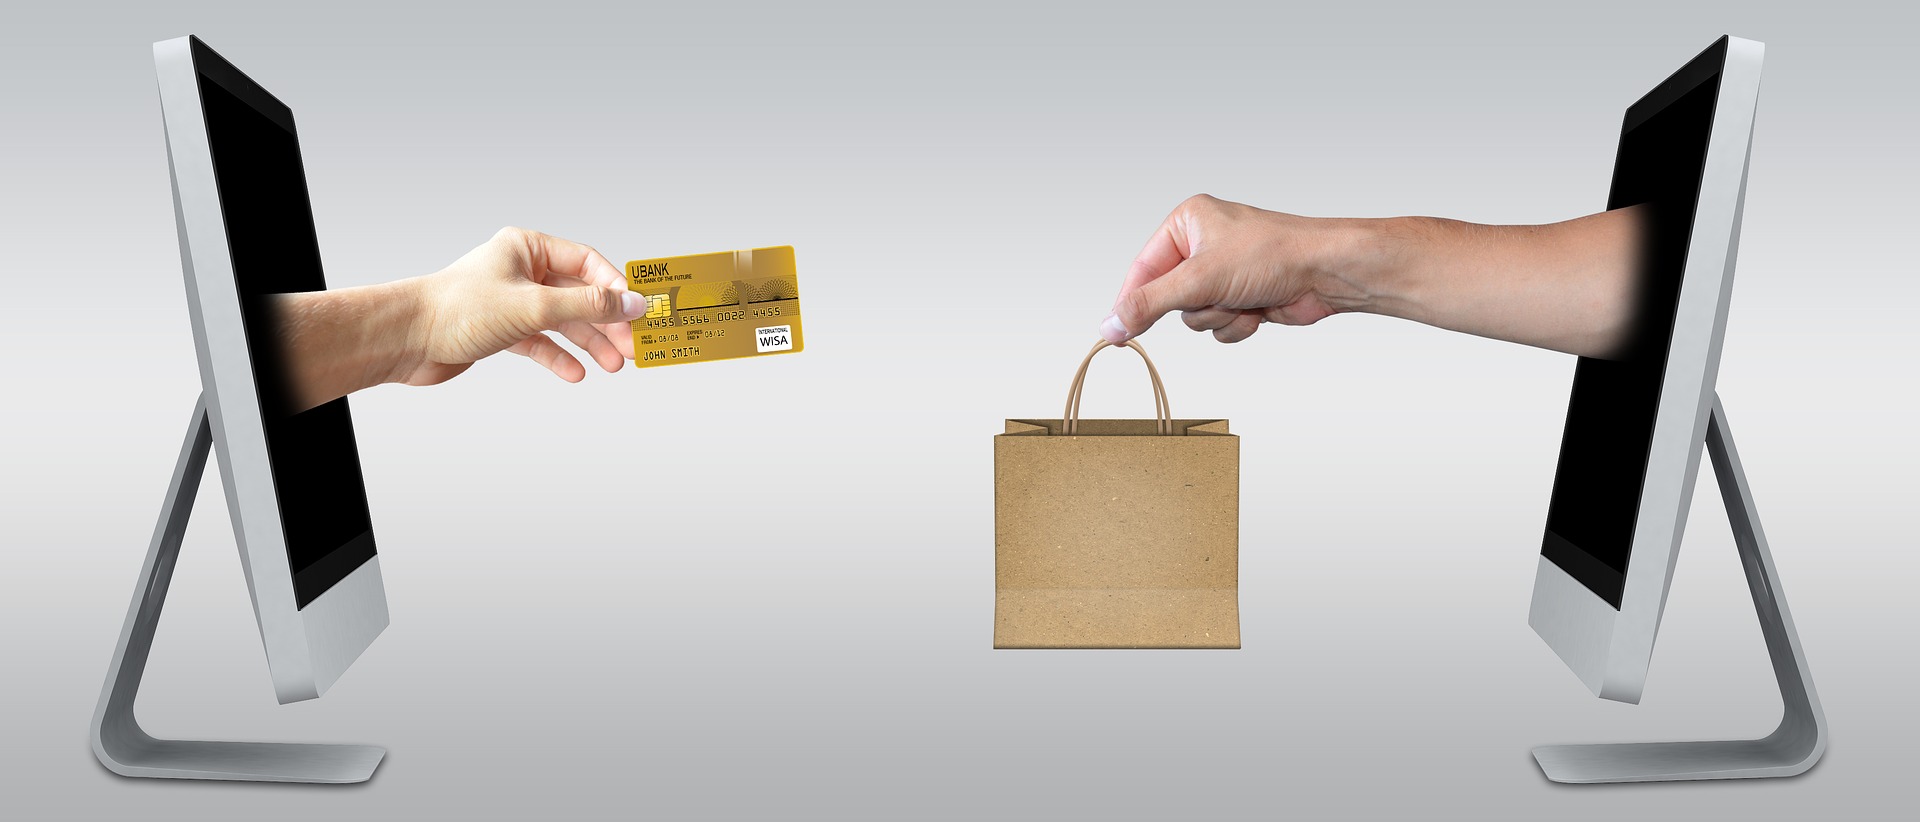 Image illustrating e-commerce/online transactions